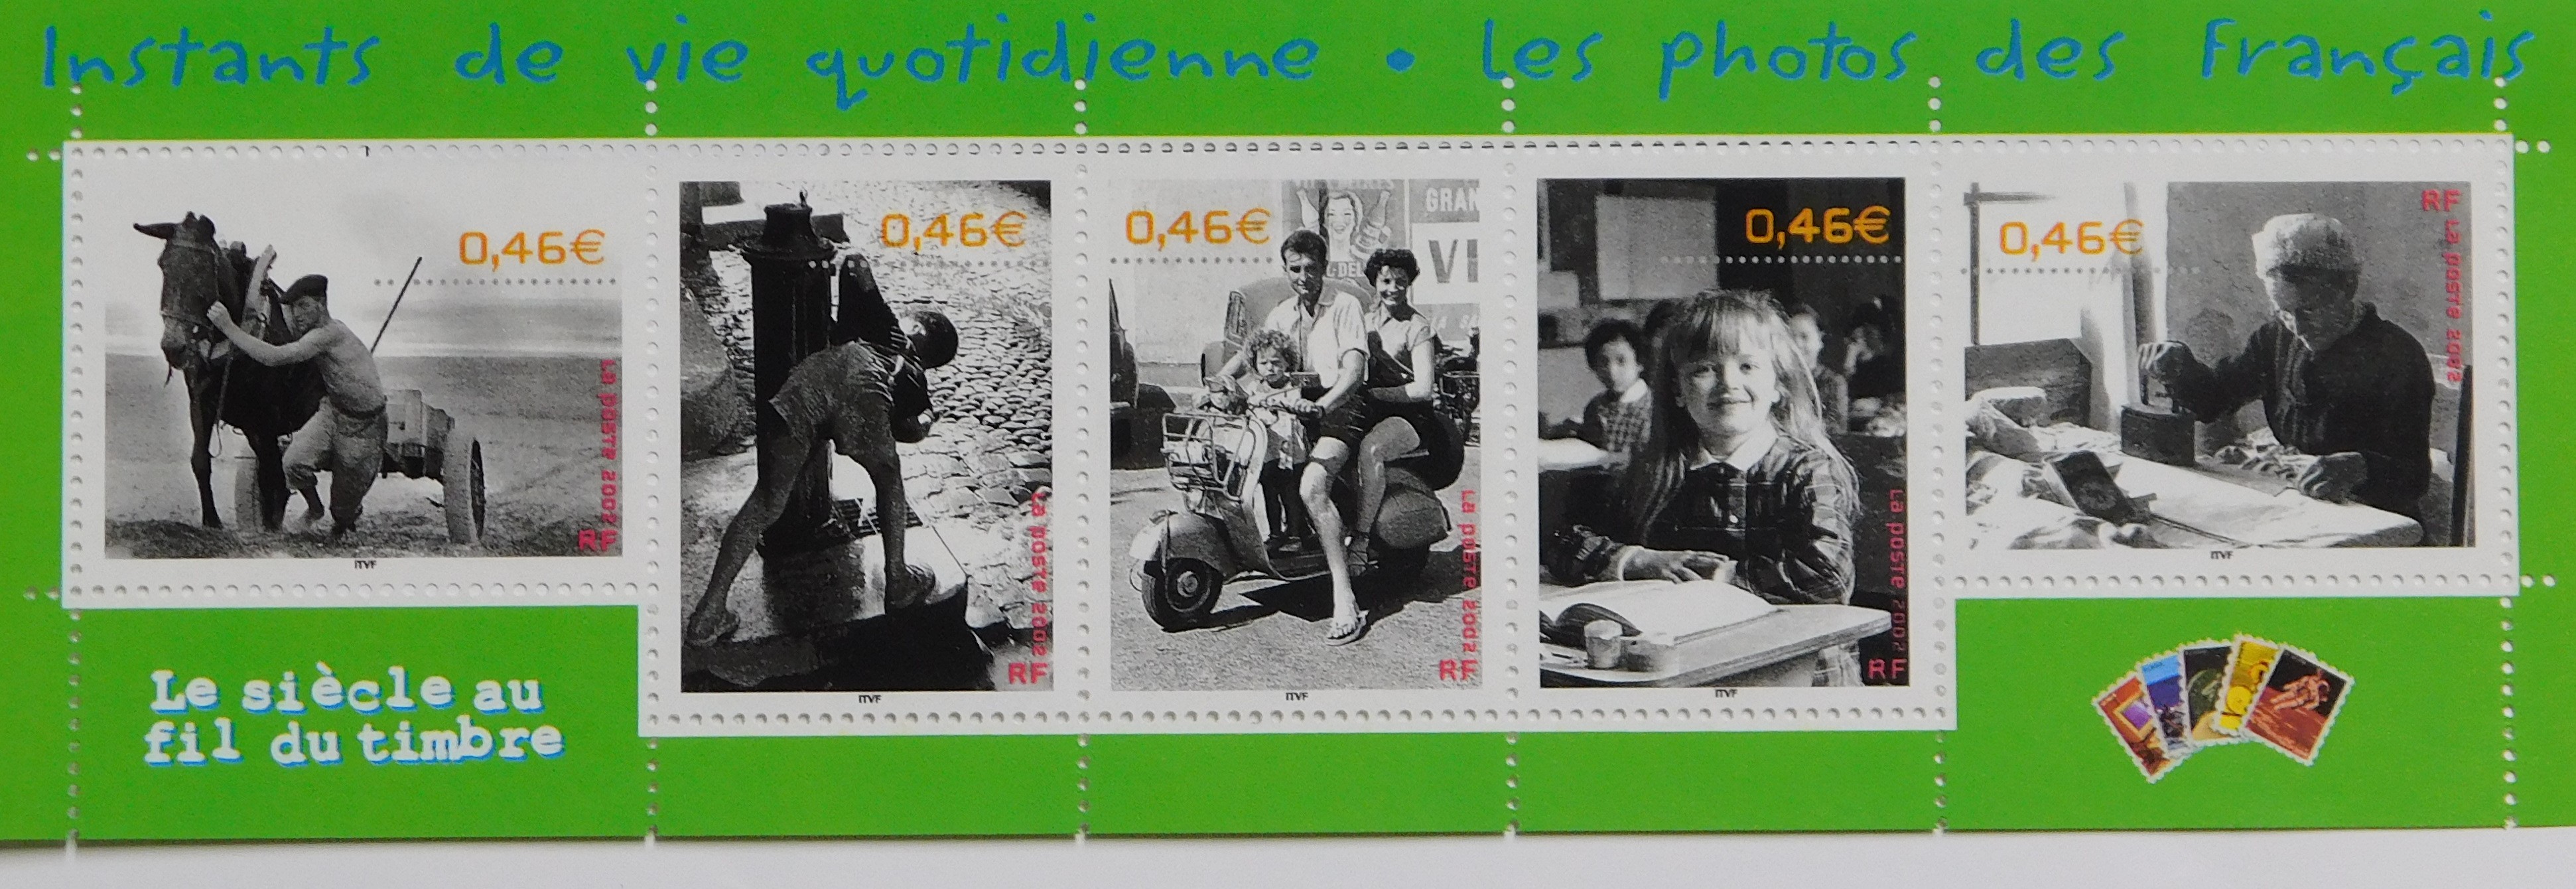 France 2002 20th Century 6th series SG MS3861 u/m miniature sheet in presentation folder - Image 3 of 4